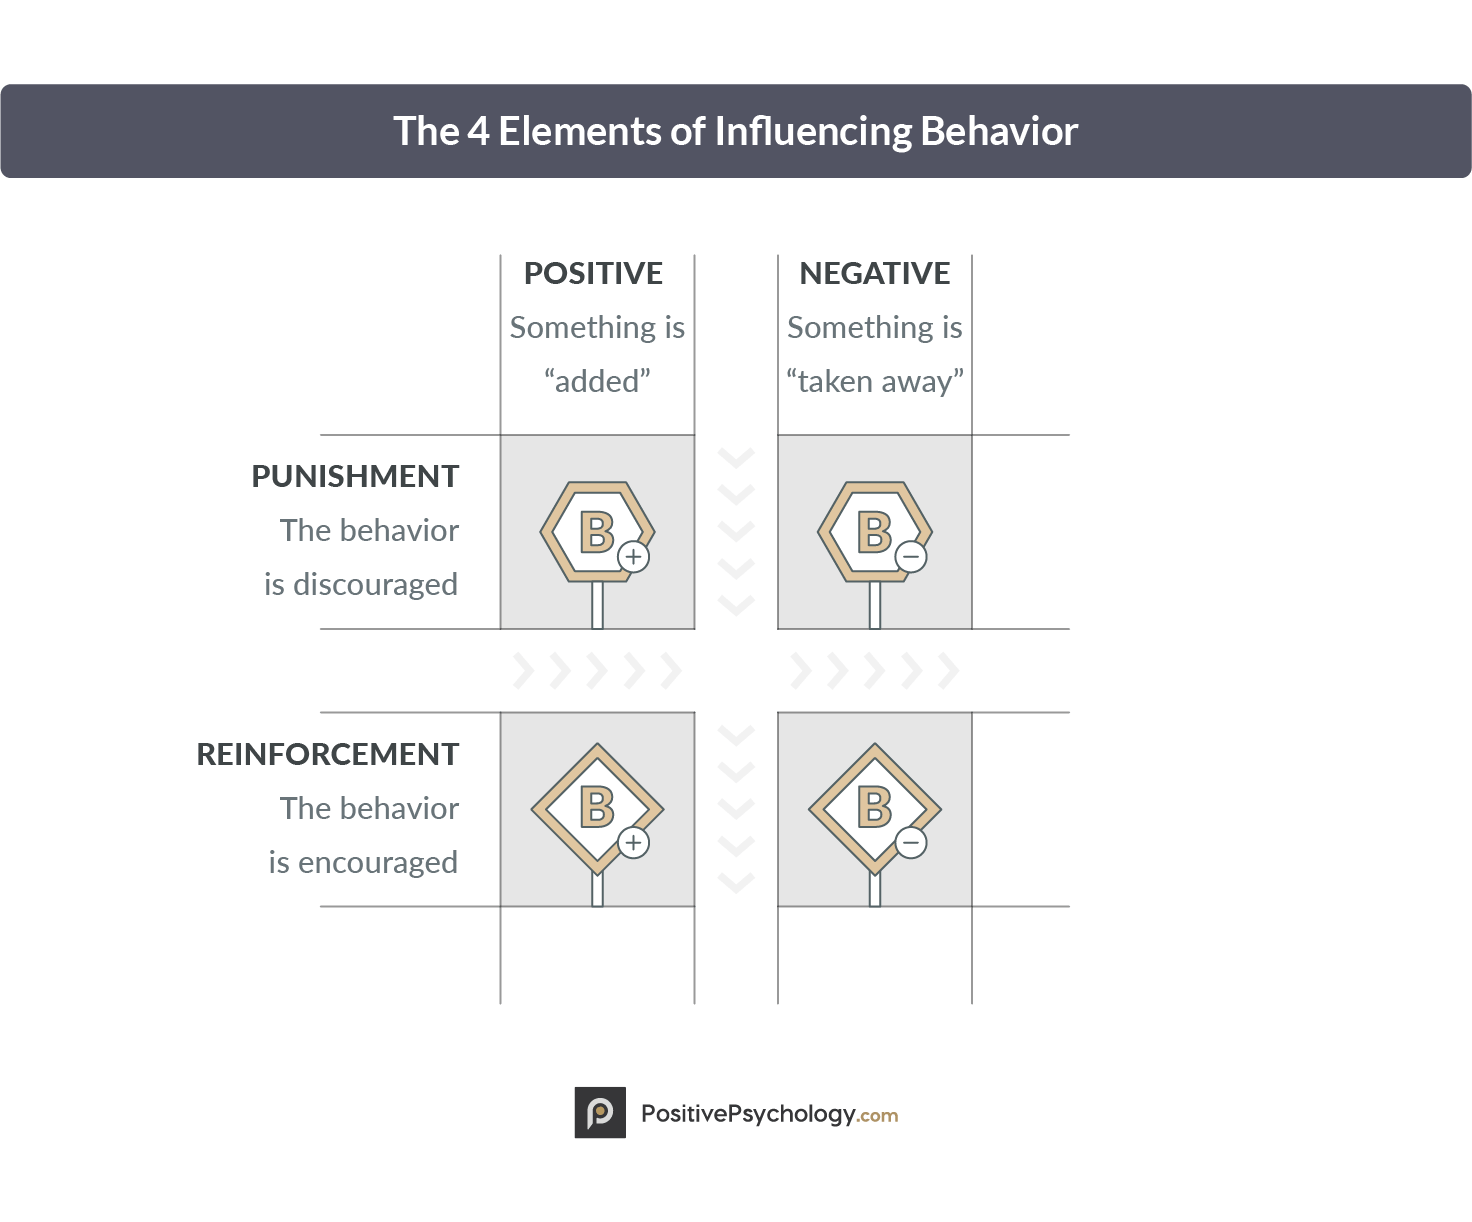 The 4 Elements of Influencing Behavior